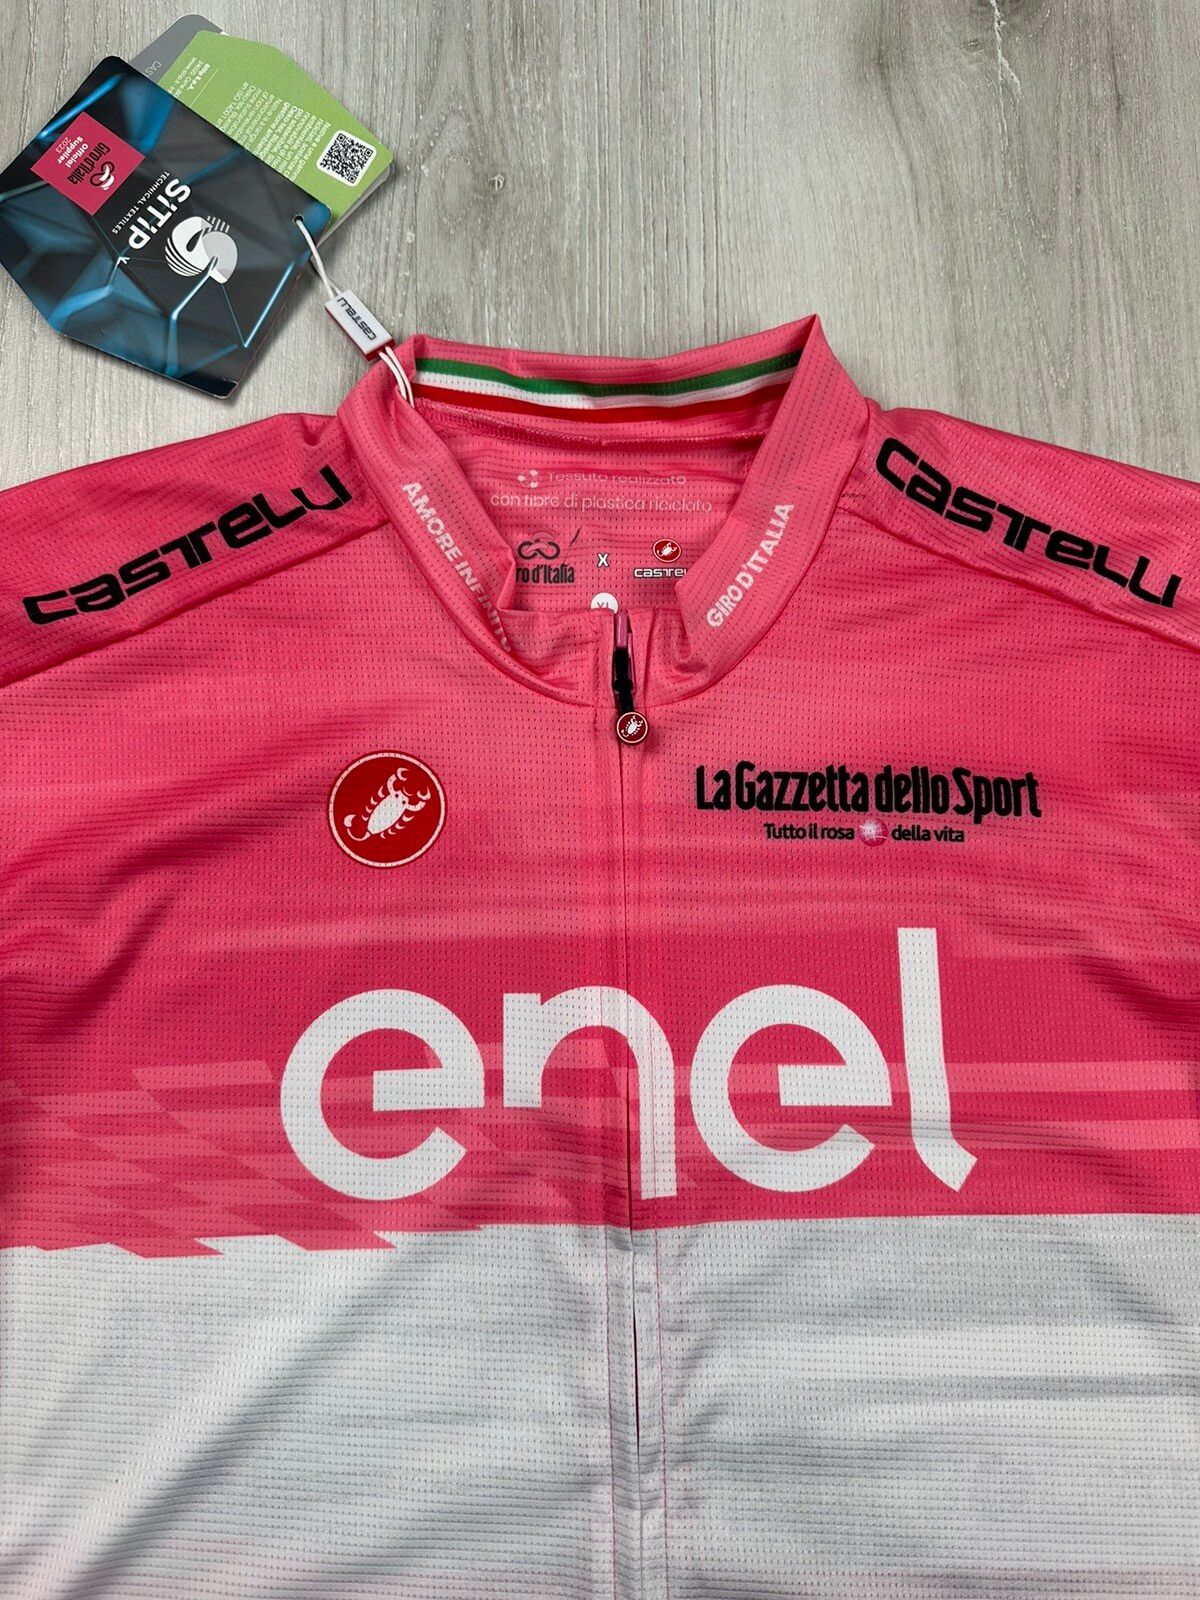 Cycle Castelli x Giro D italia Cycling Shirt Jersey Size US XL / EU 56 / 4 - 3 Thumbnail